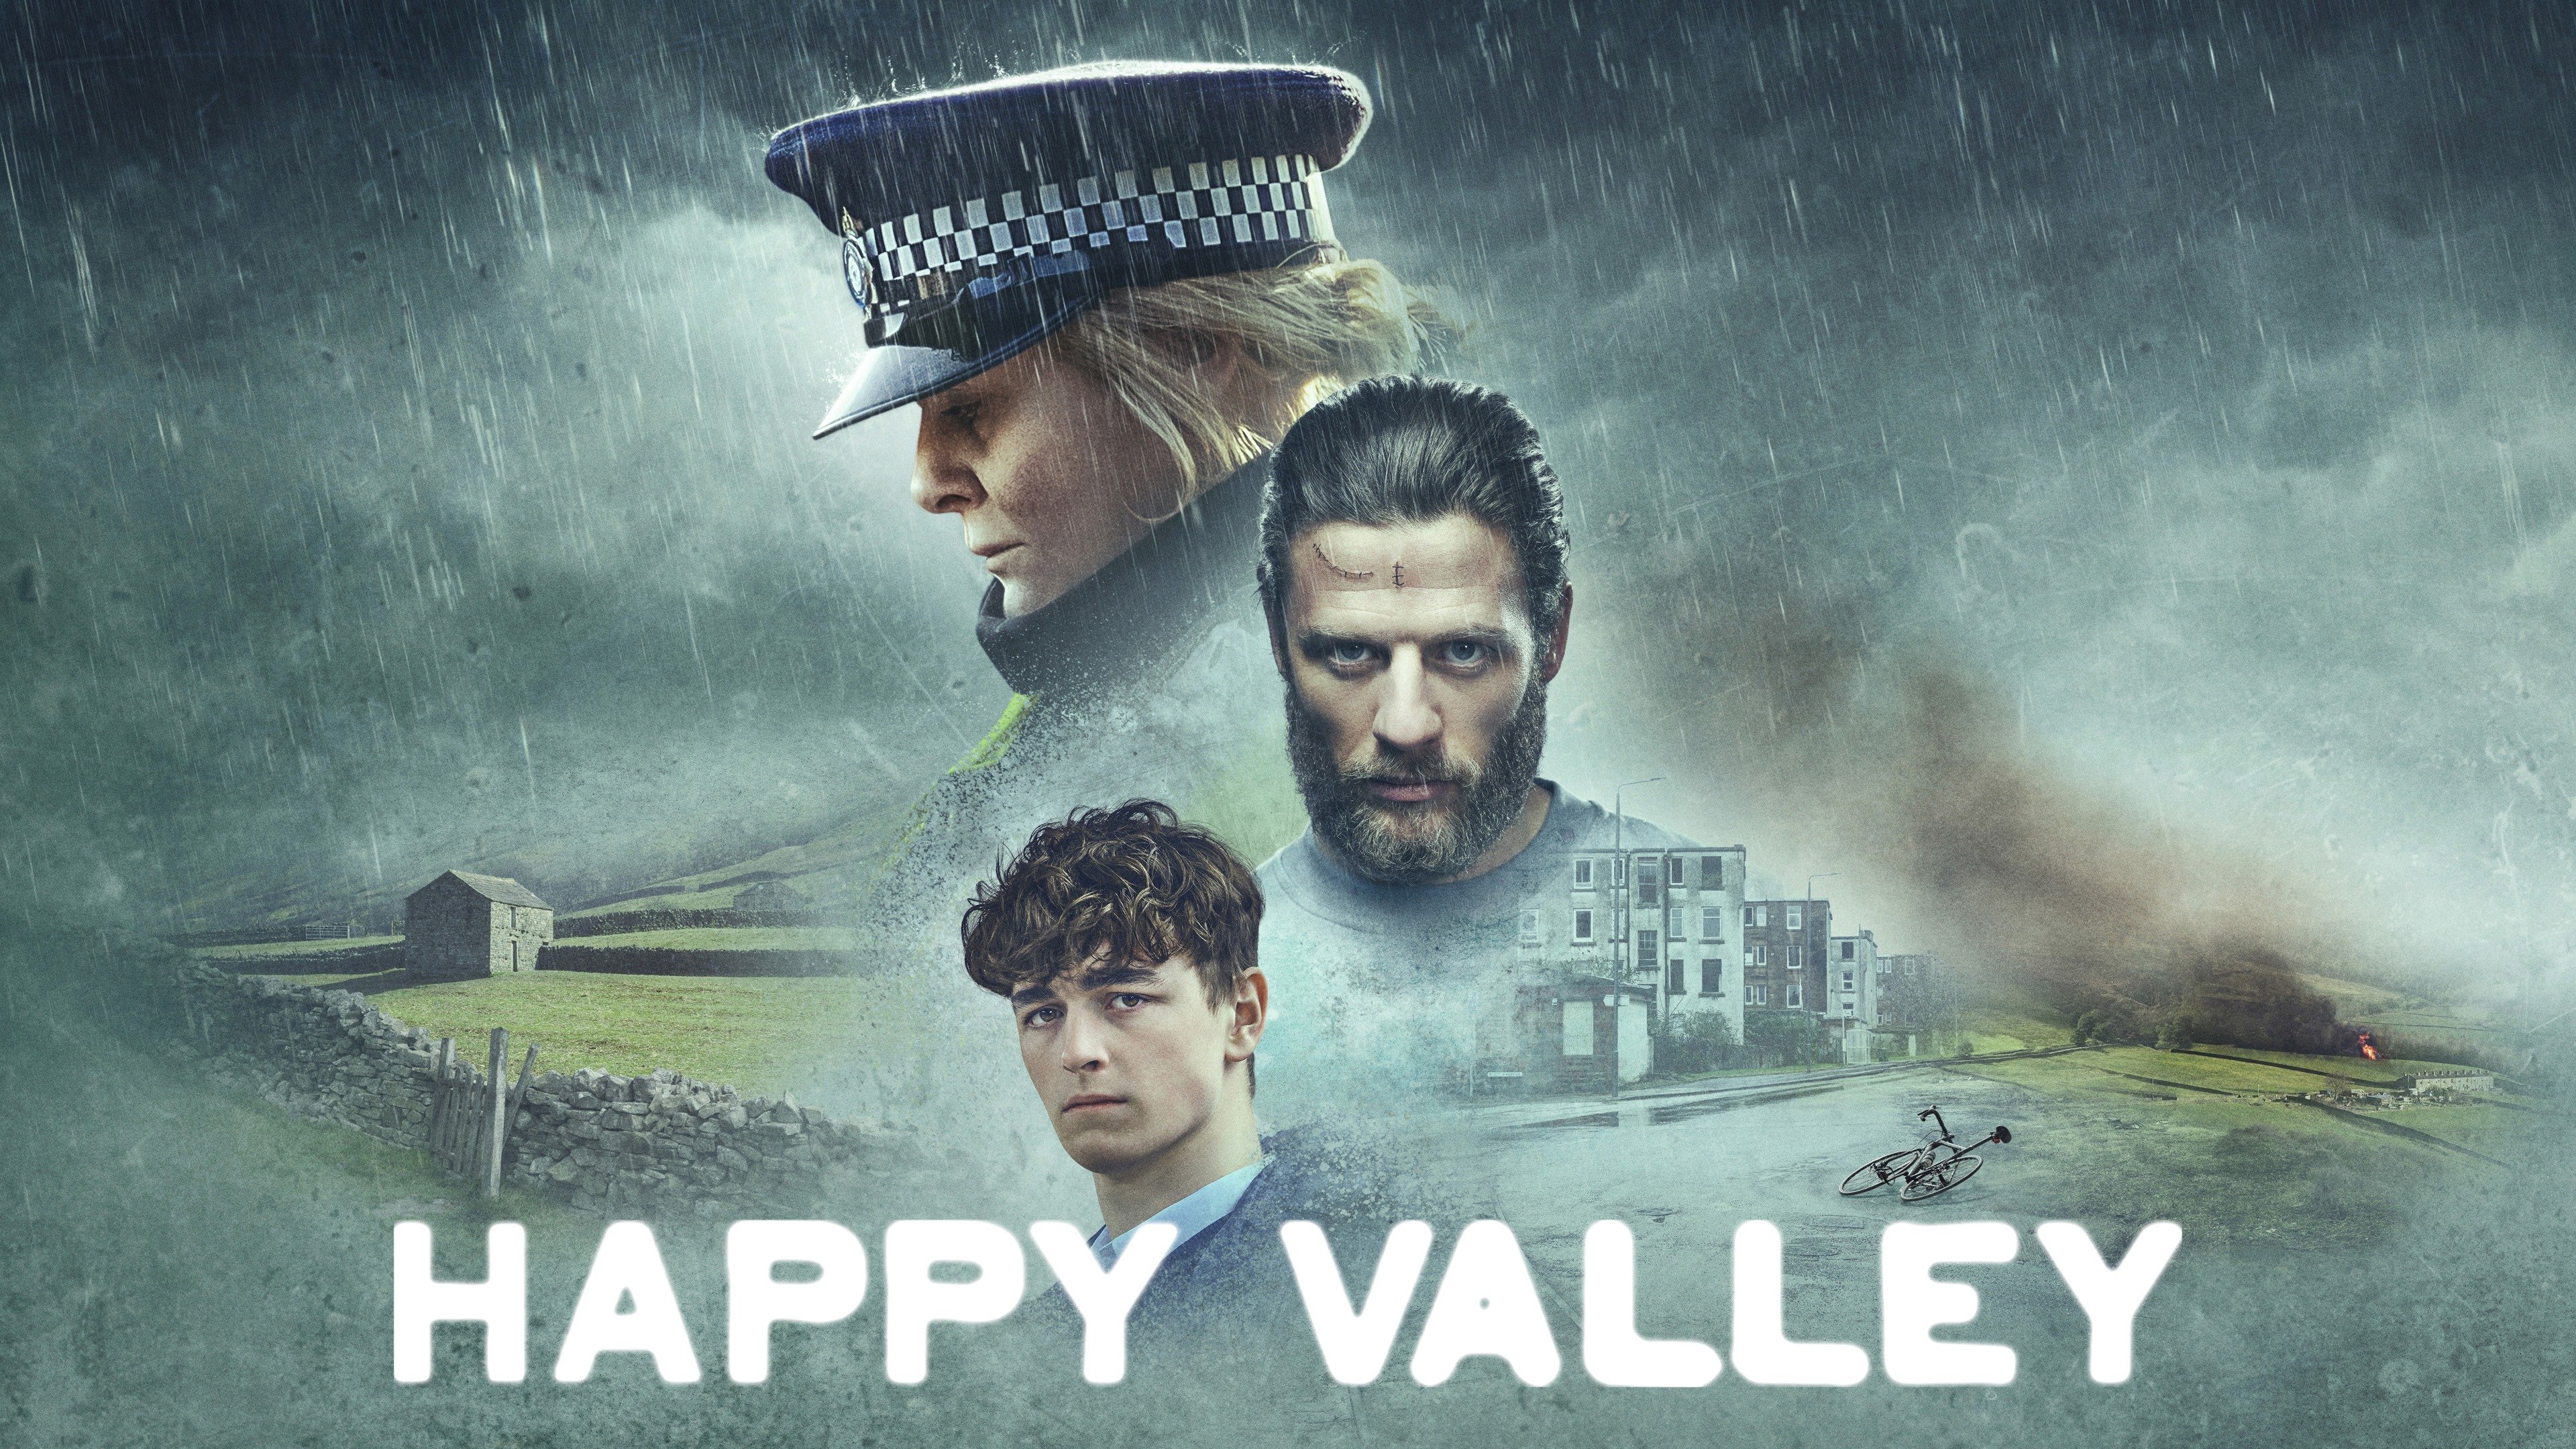 Happy Valley - Acorn TV u0026 BBC America Series - Where To Watch